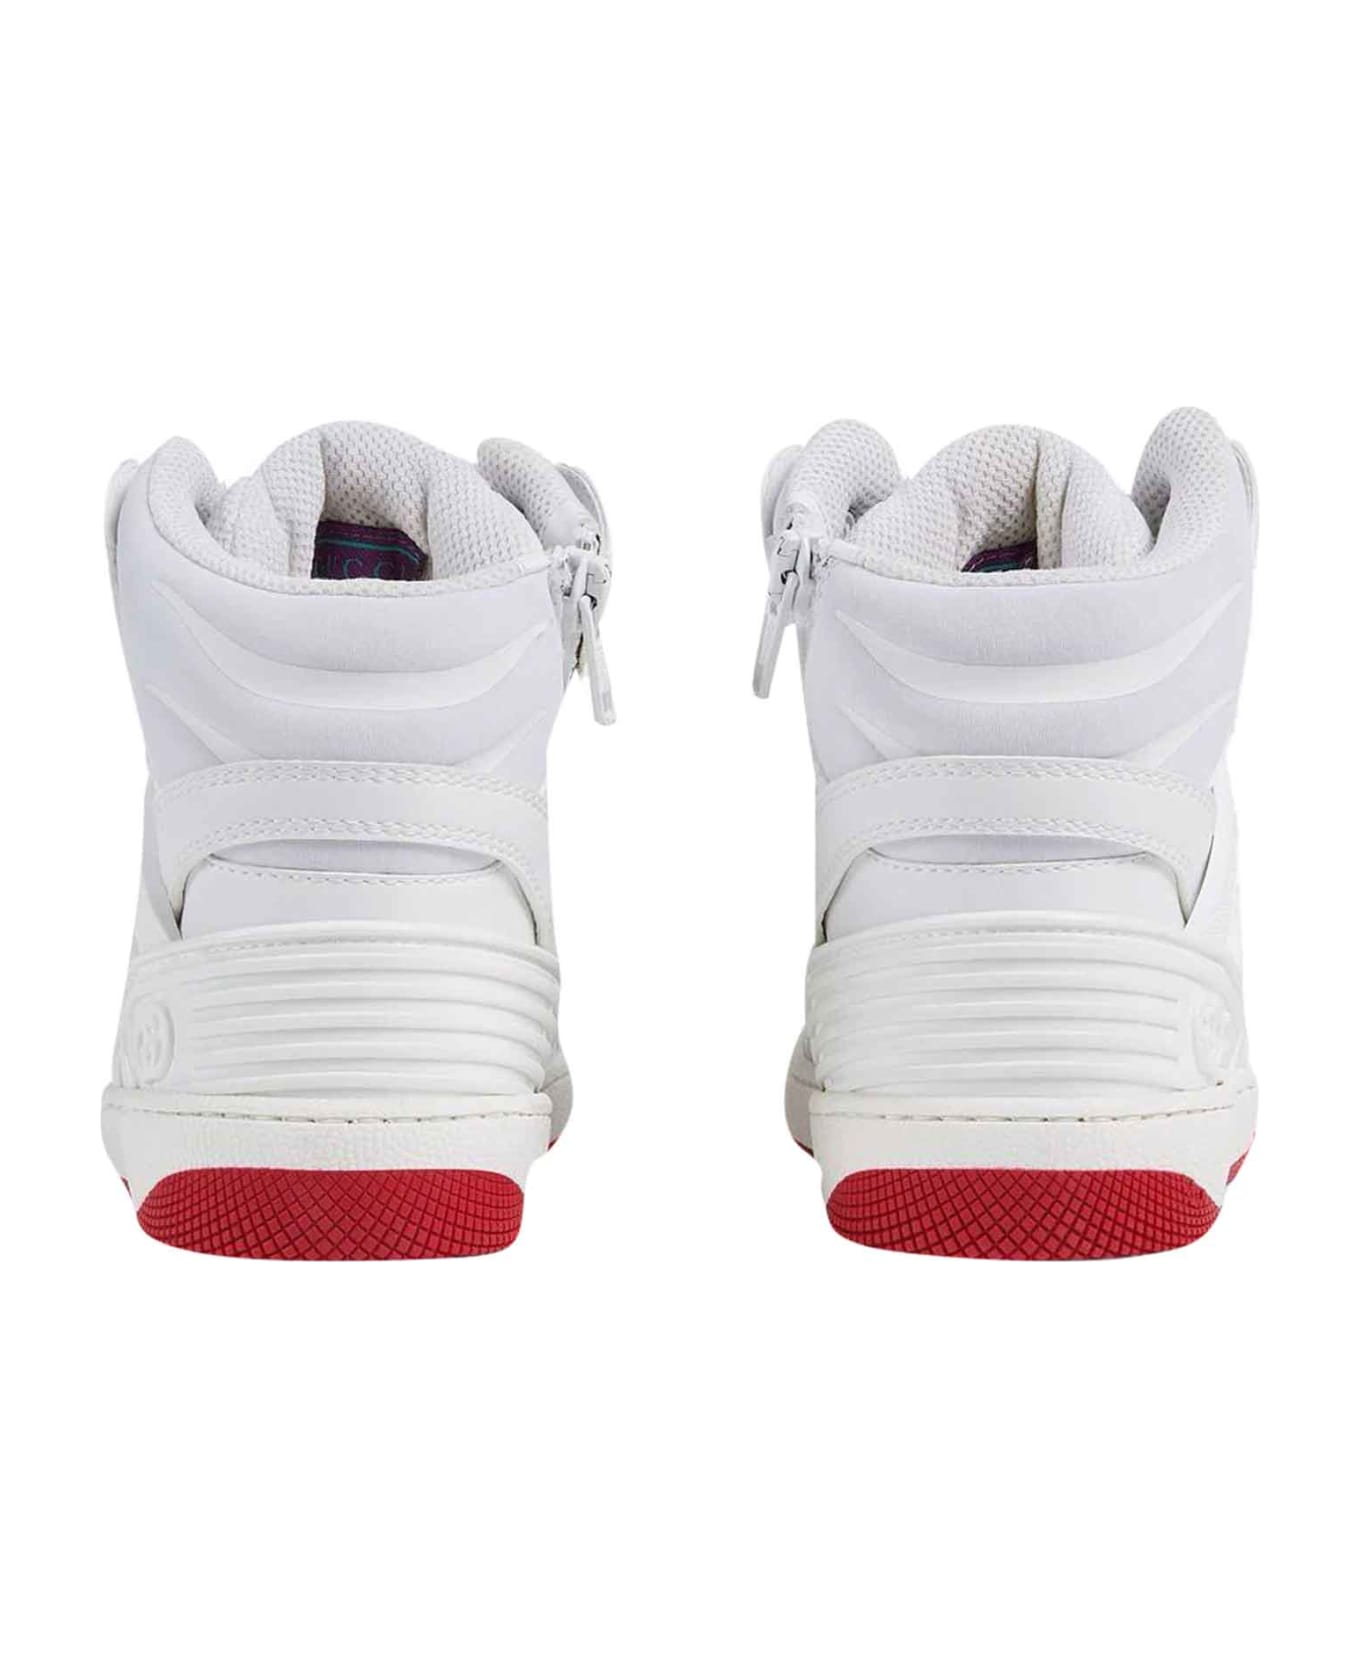 Gucci White Sneakers Unisex - Bianco